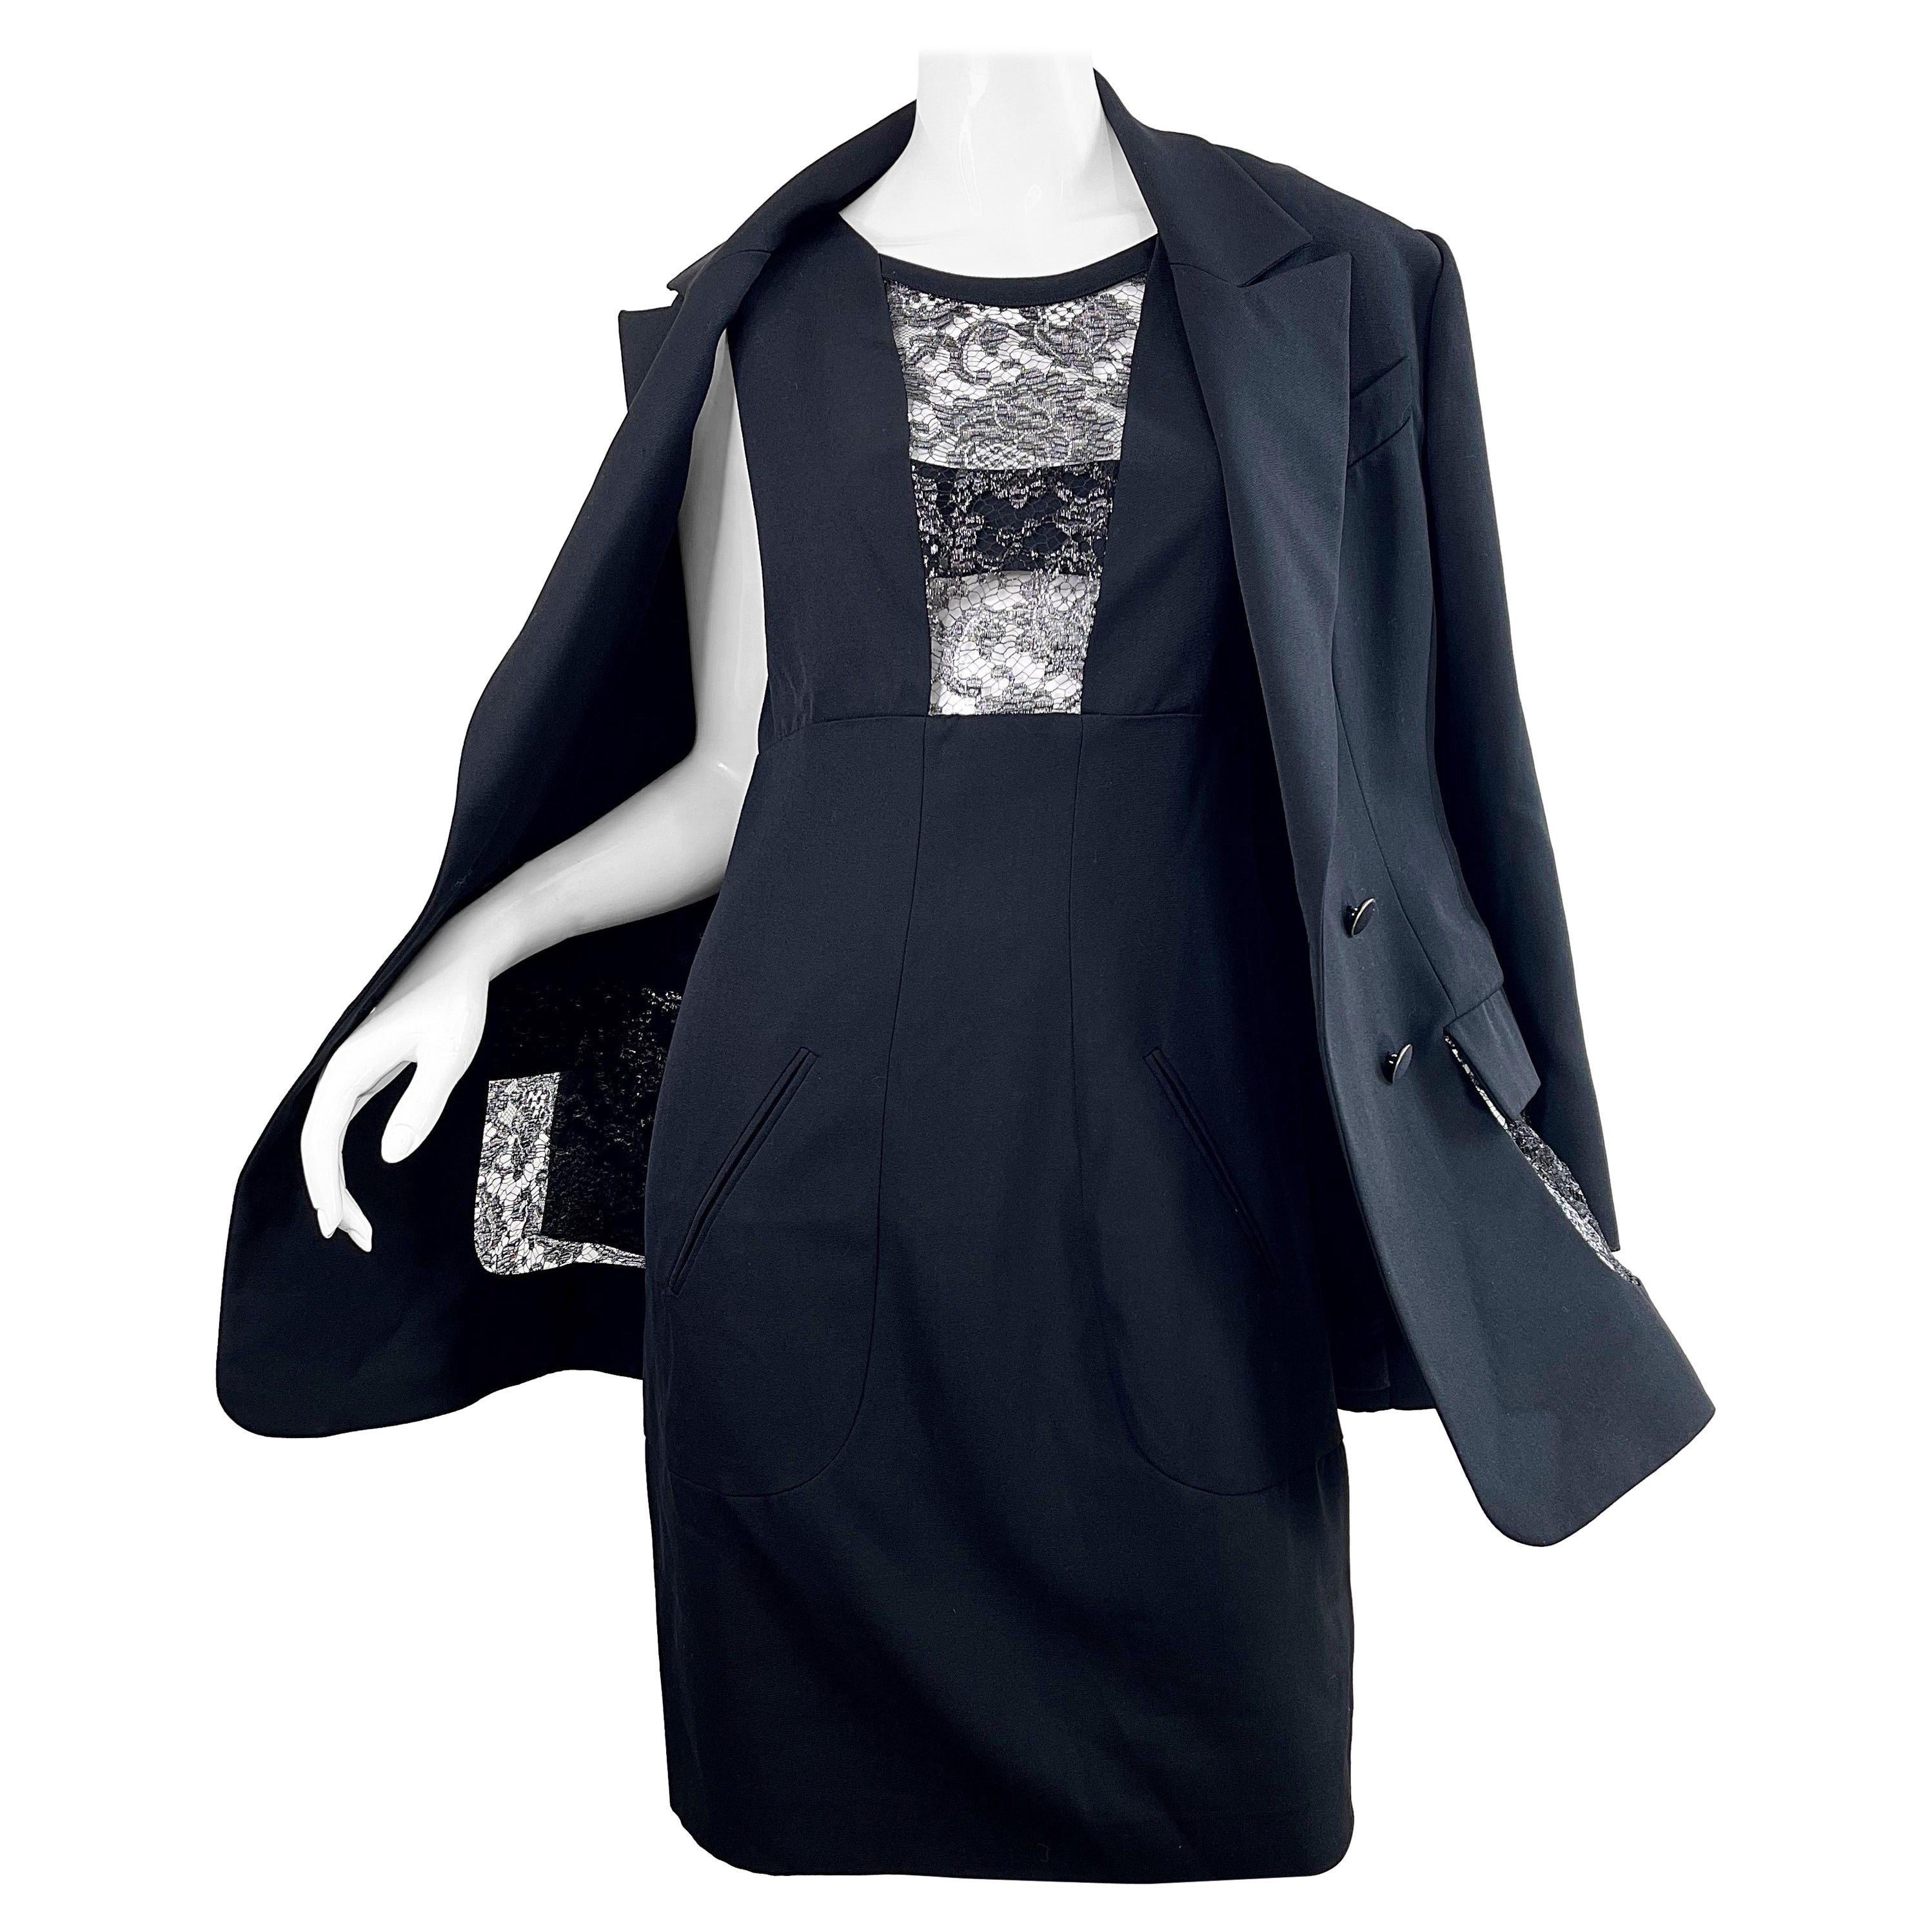 Karl Lagerfeld 1980s Black Lace Cut - Out Size 44 / 10 12 Vintage Dress + Jacket